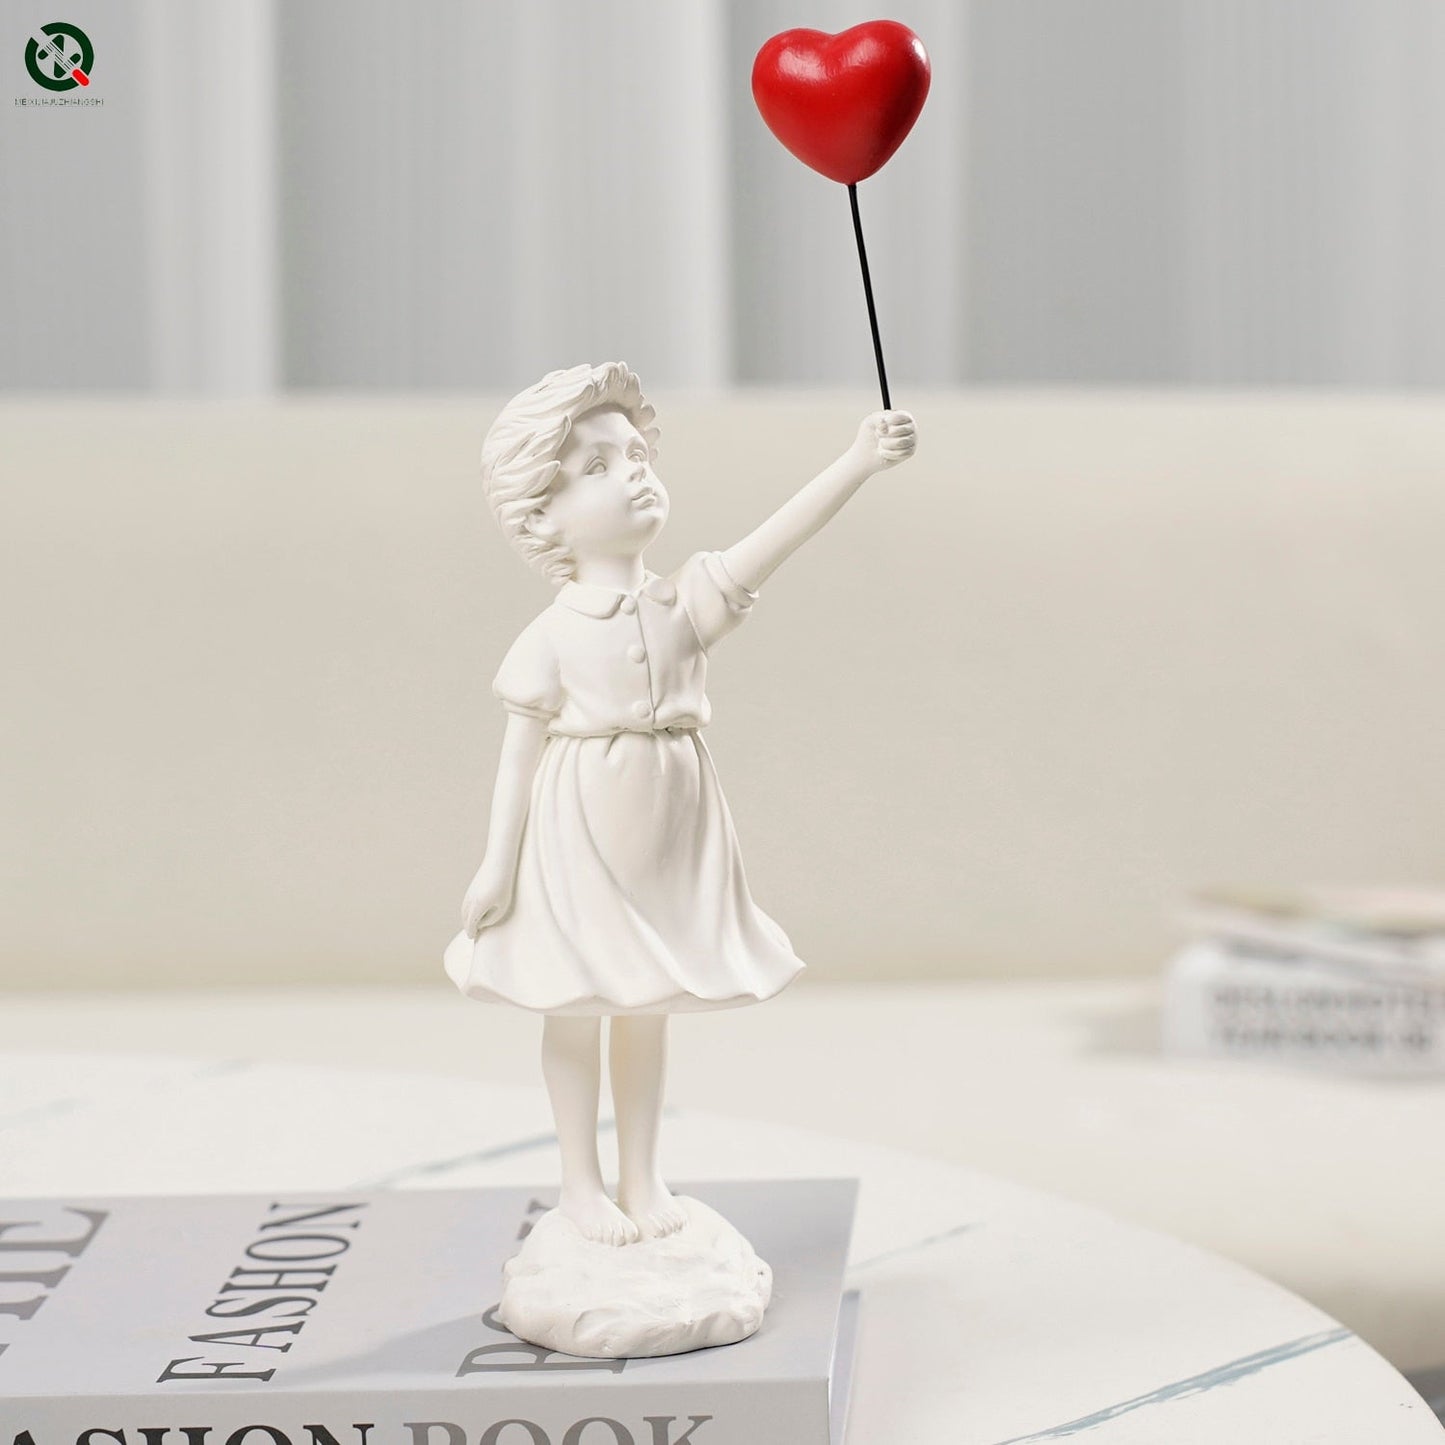 Flying Ballon Girl Figurine, Banksy Home Decor Modern Art Sculpture, Resin Figure Craft Ornament, Collectible Statue